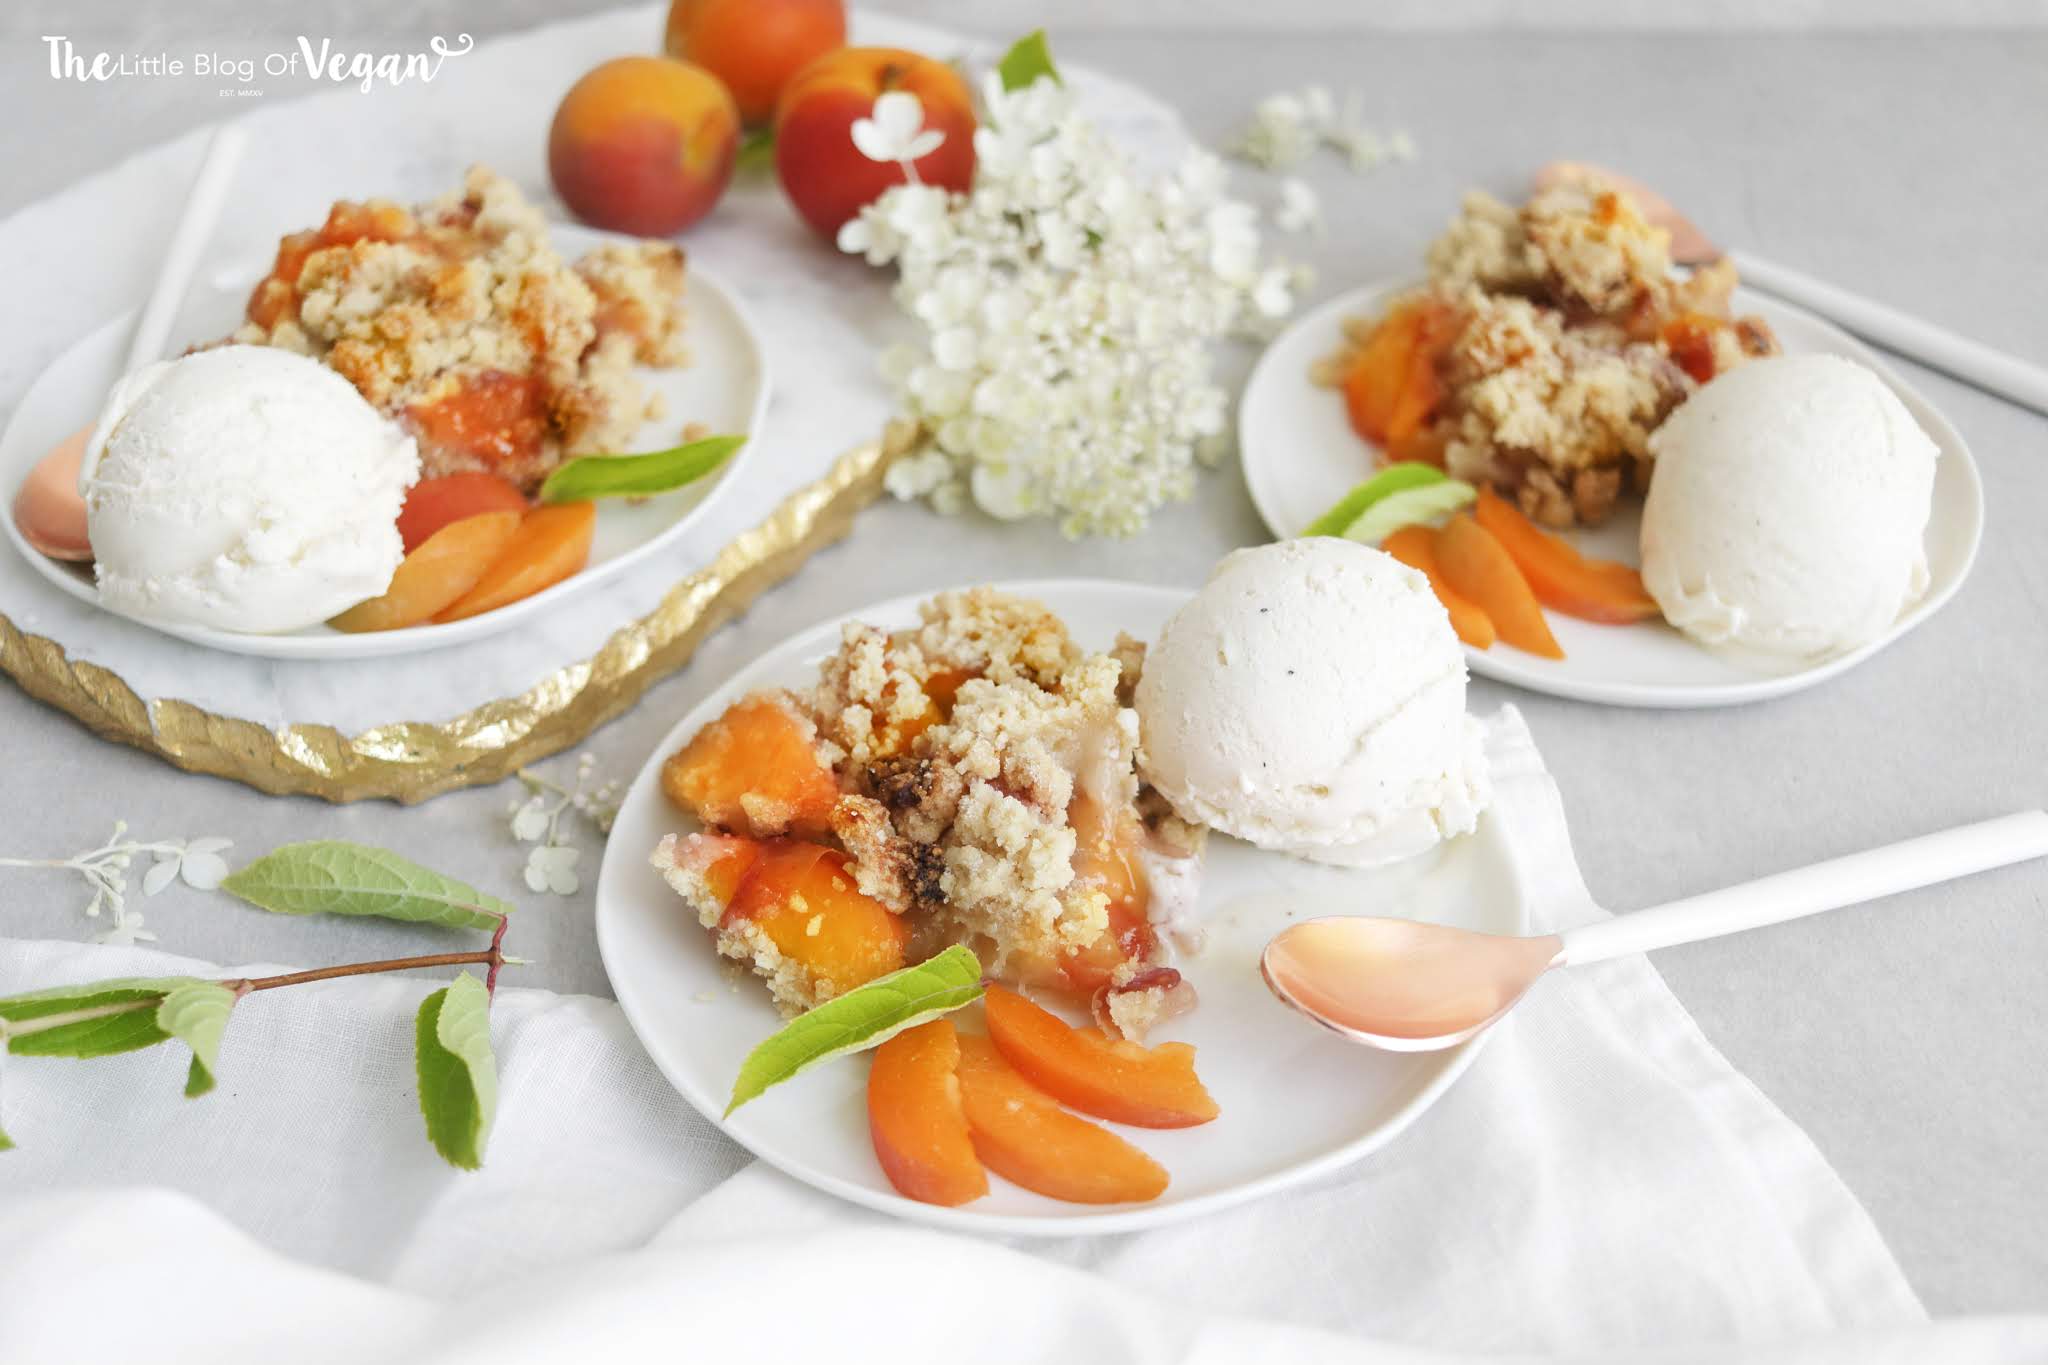 Peaches and Cream Crumble recipe